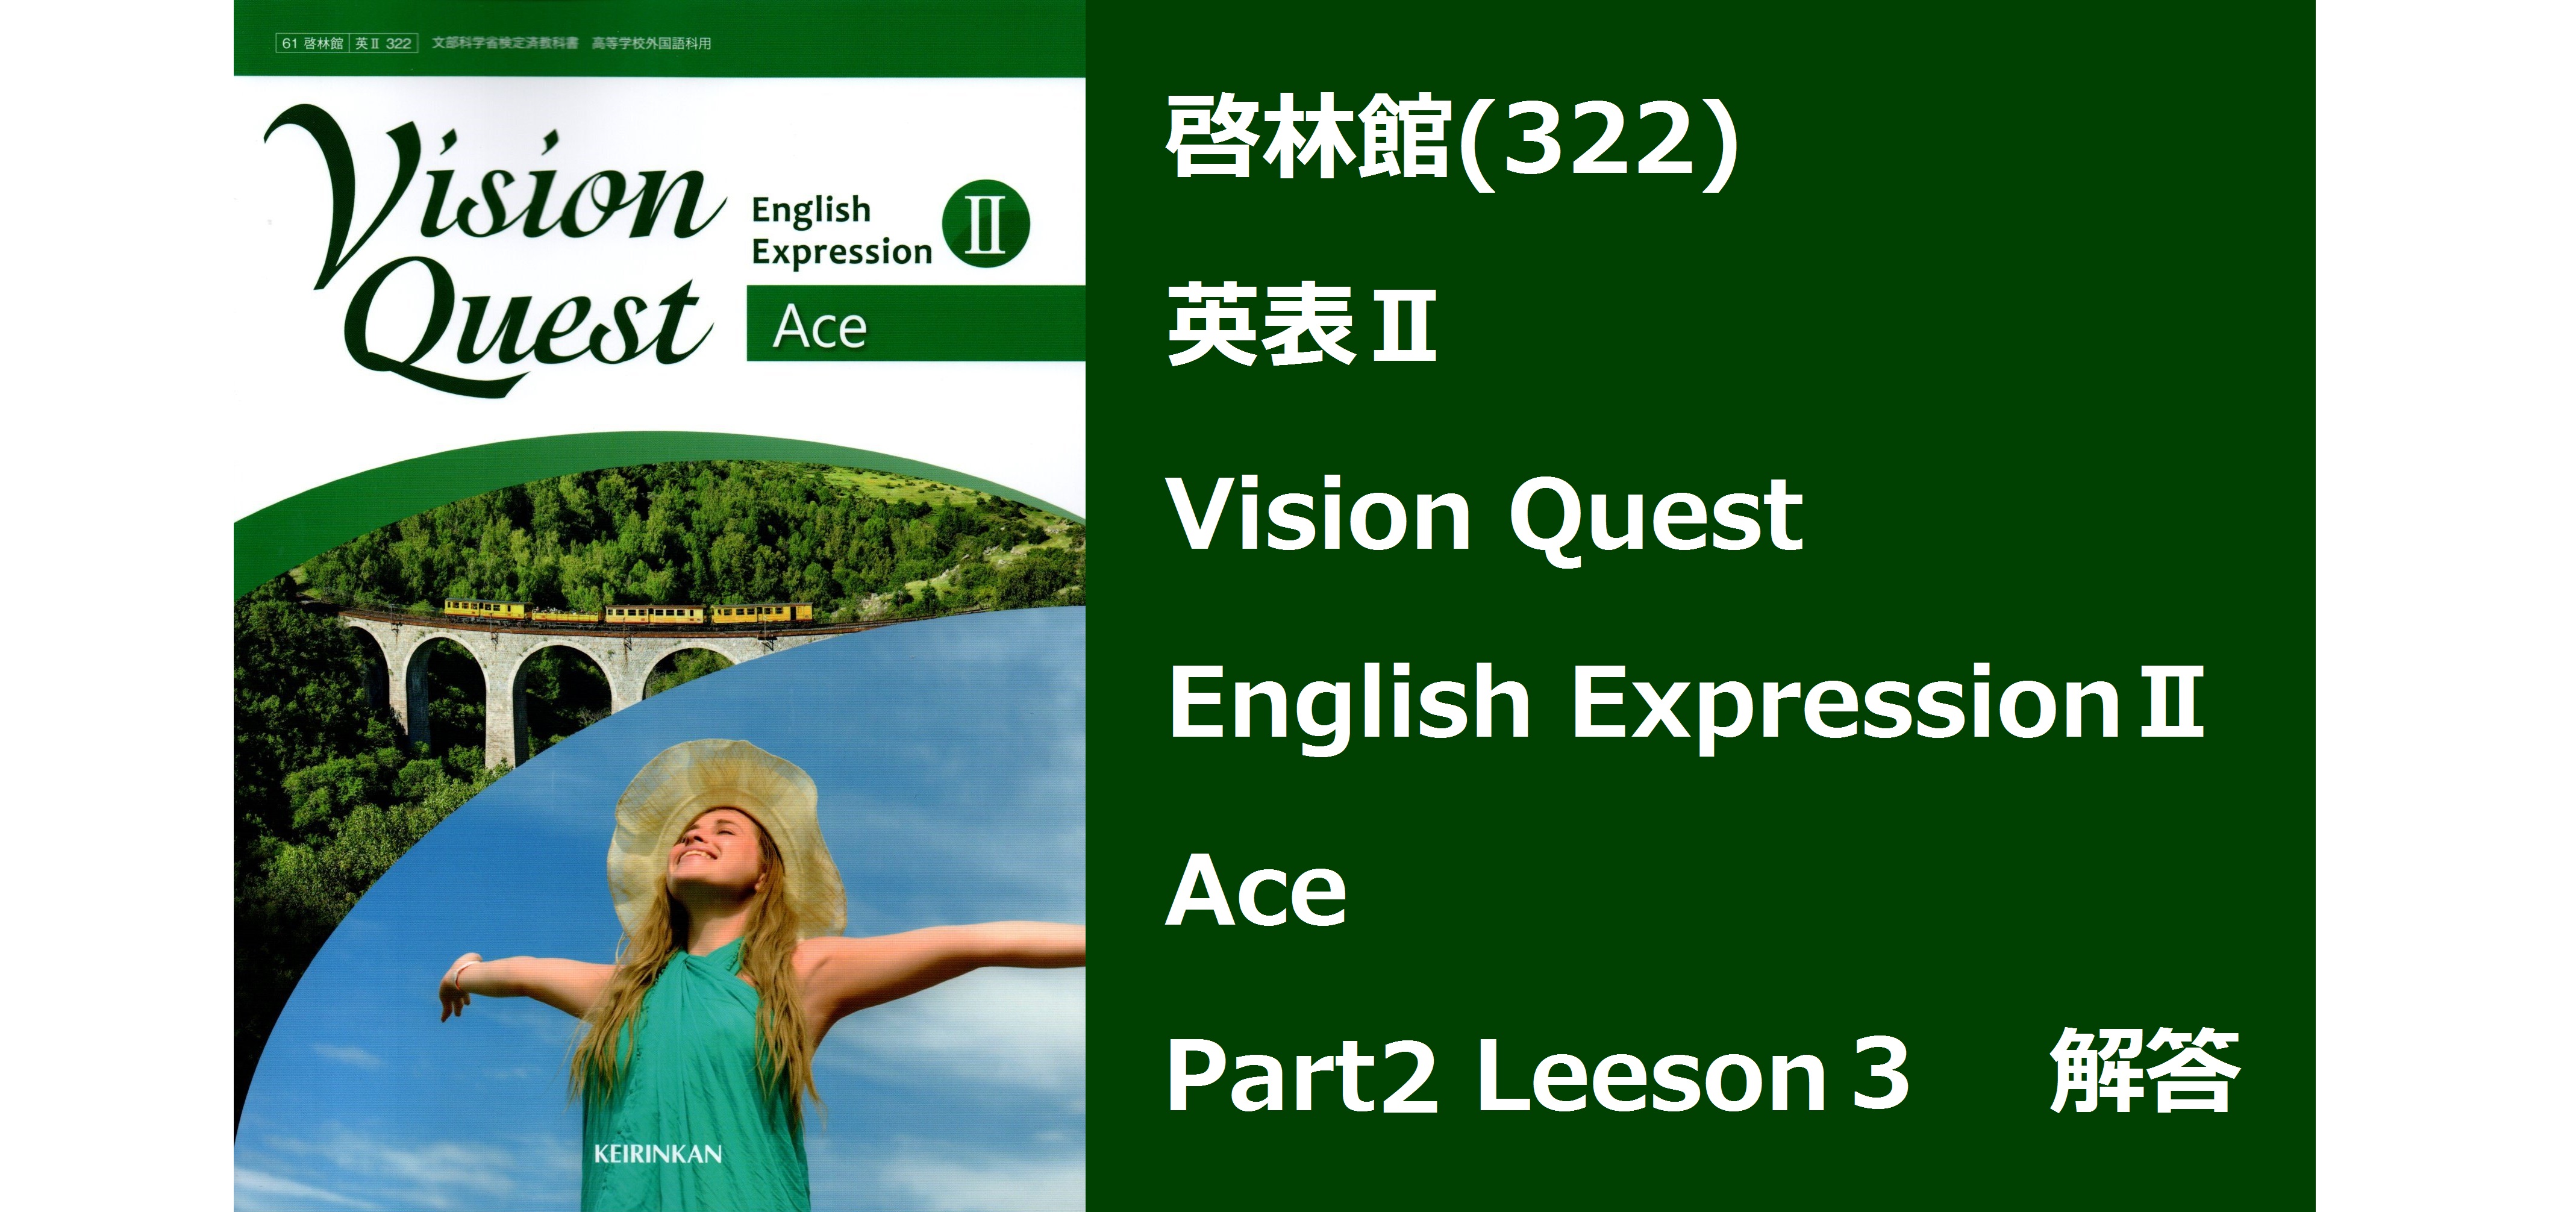 H30改訂版】英表Ⅱ Vision Quest English ExpressionⅡ Ace 啓林館(322